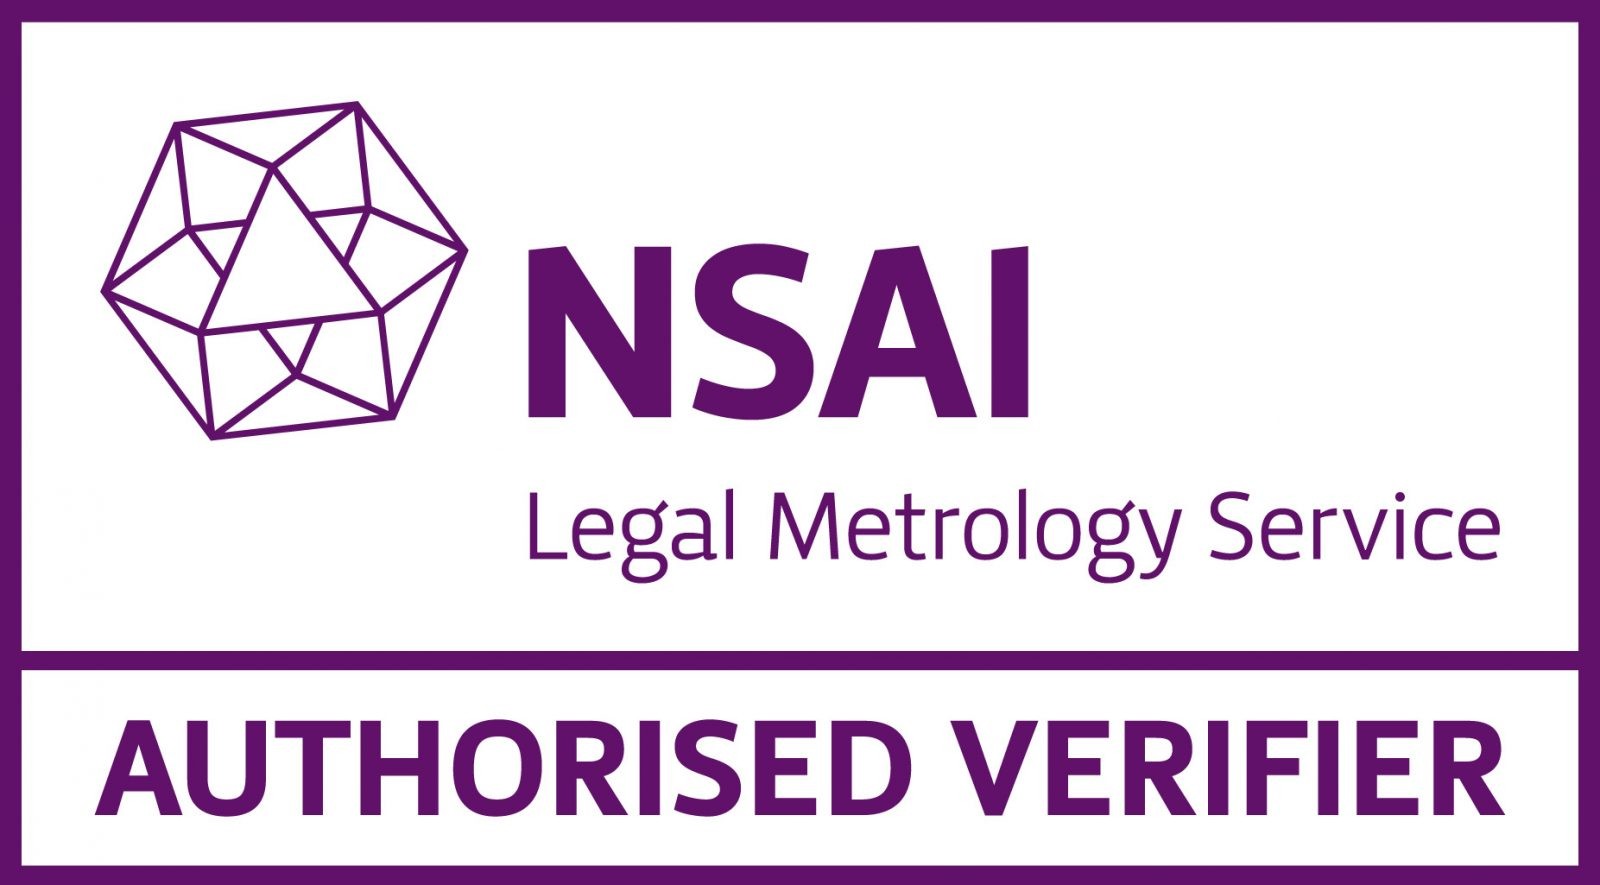 NSAI_LMS_Authorised Verifier